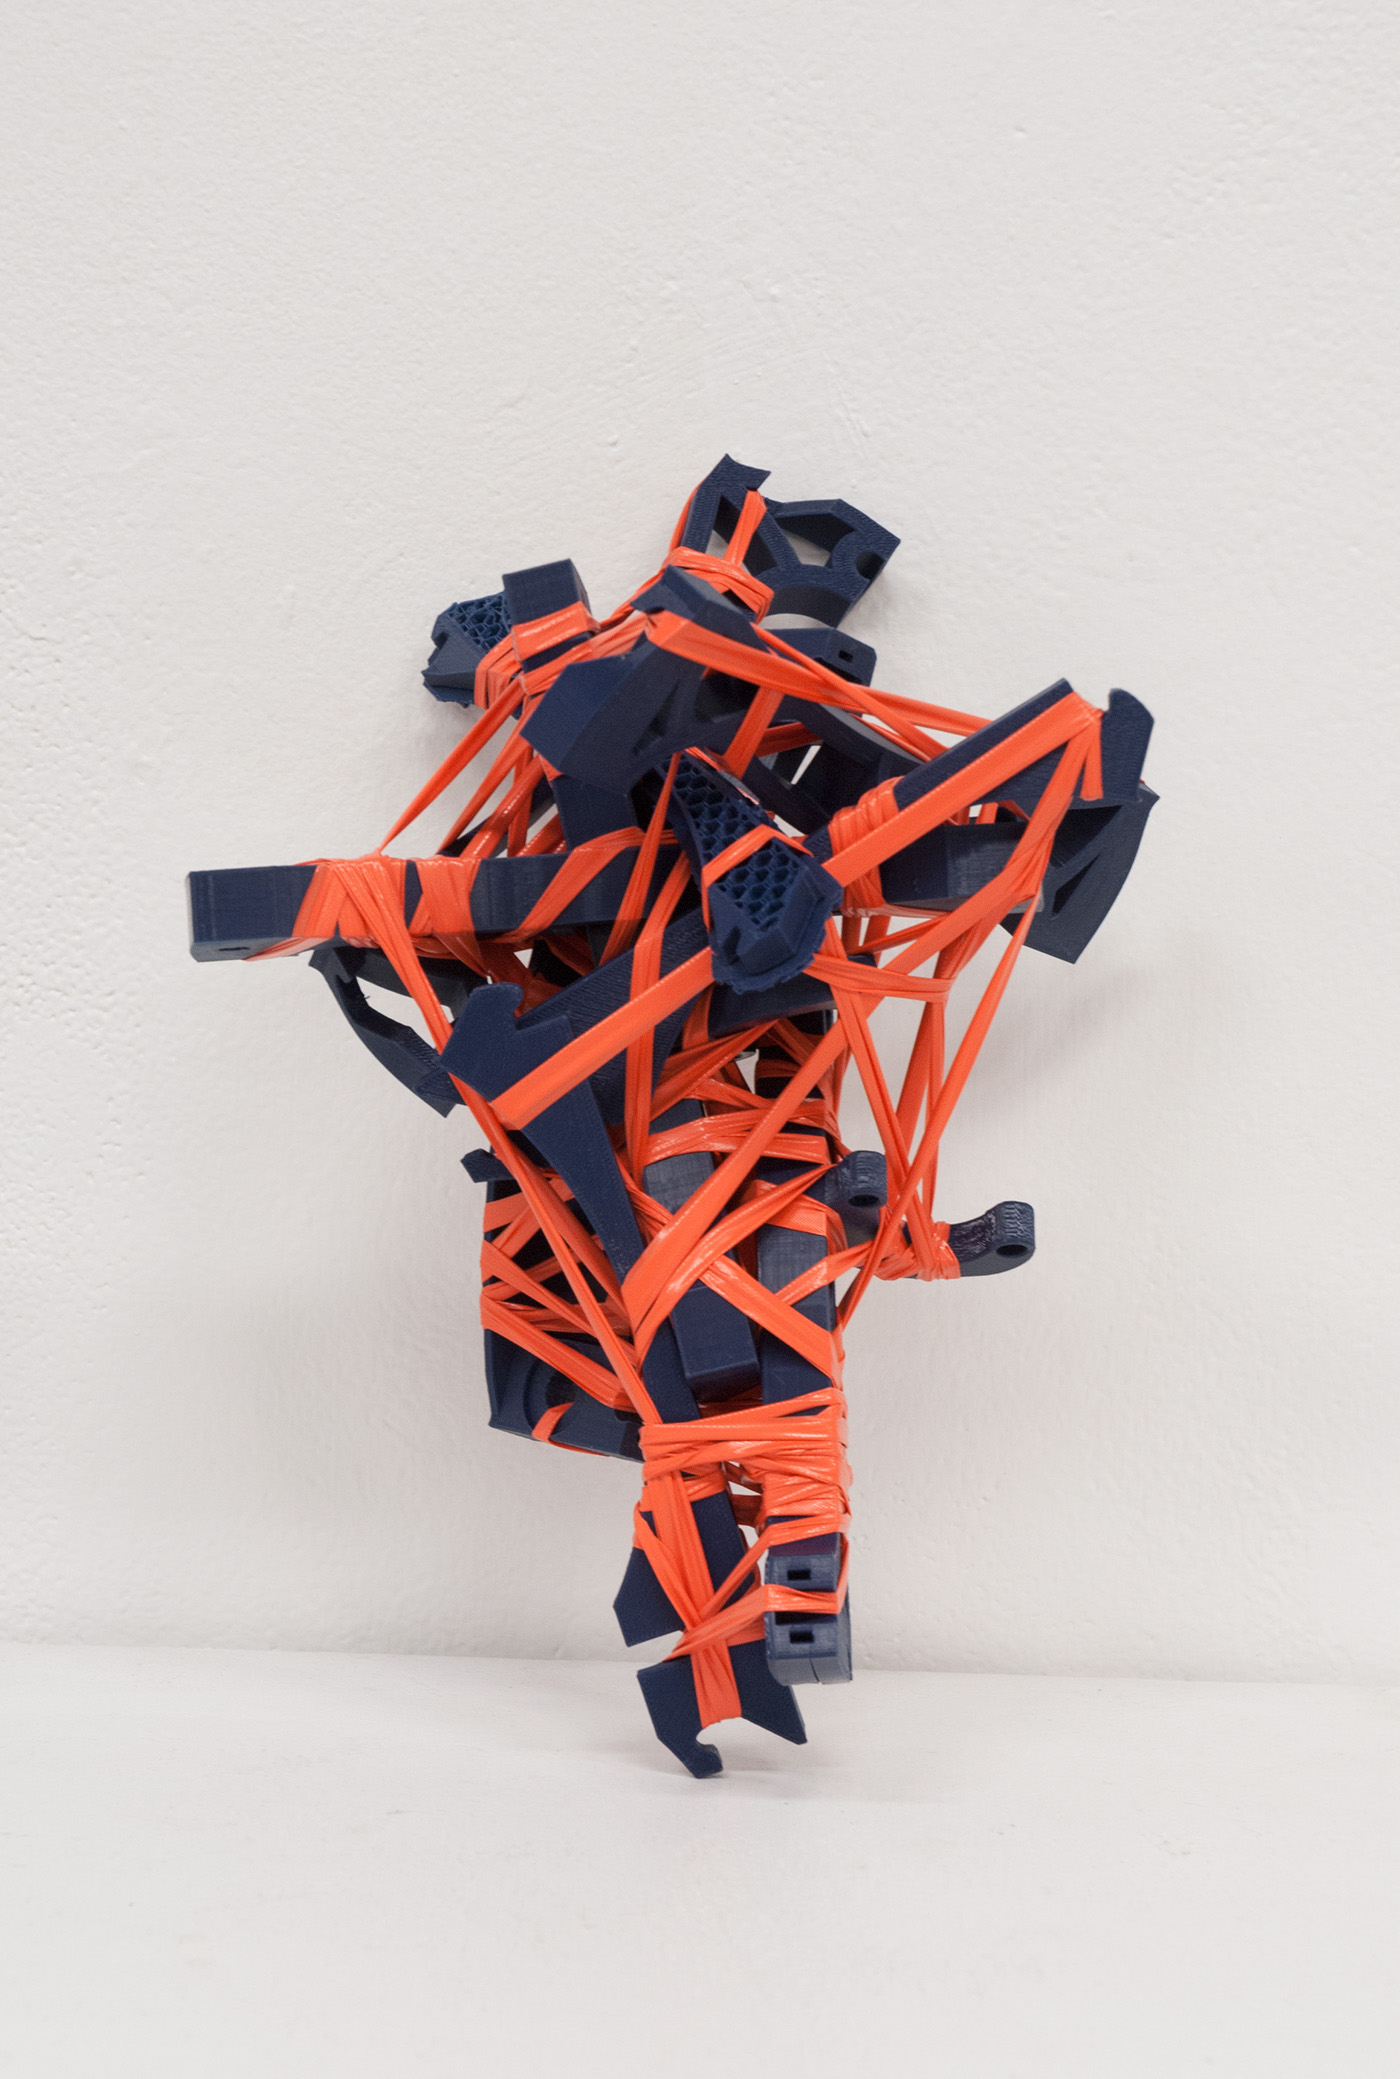 3d prints digital fabrication sculpture